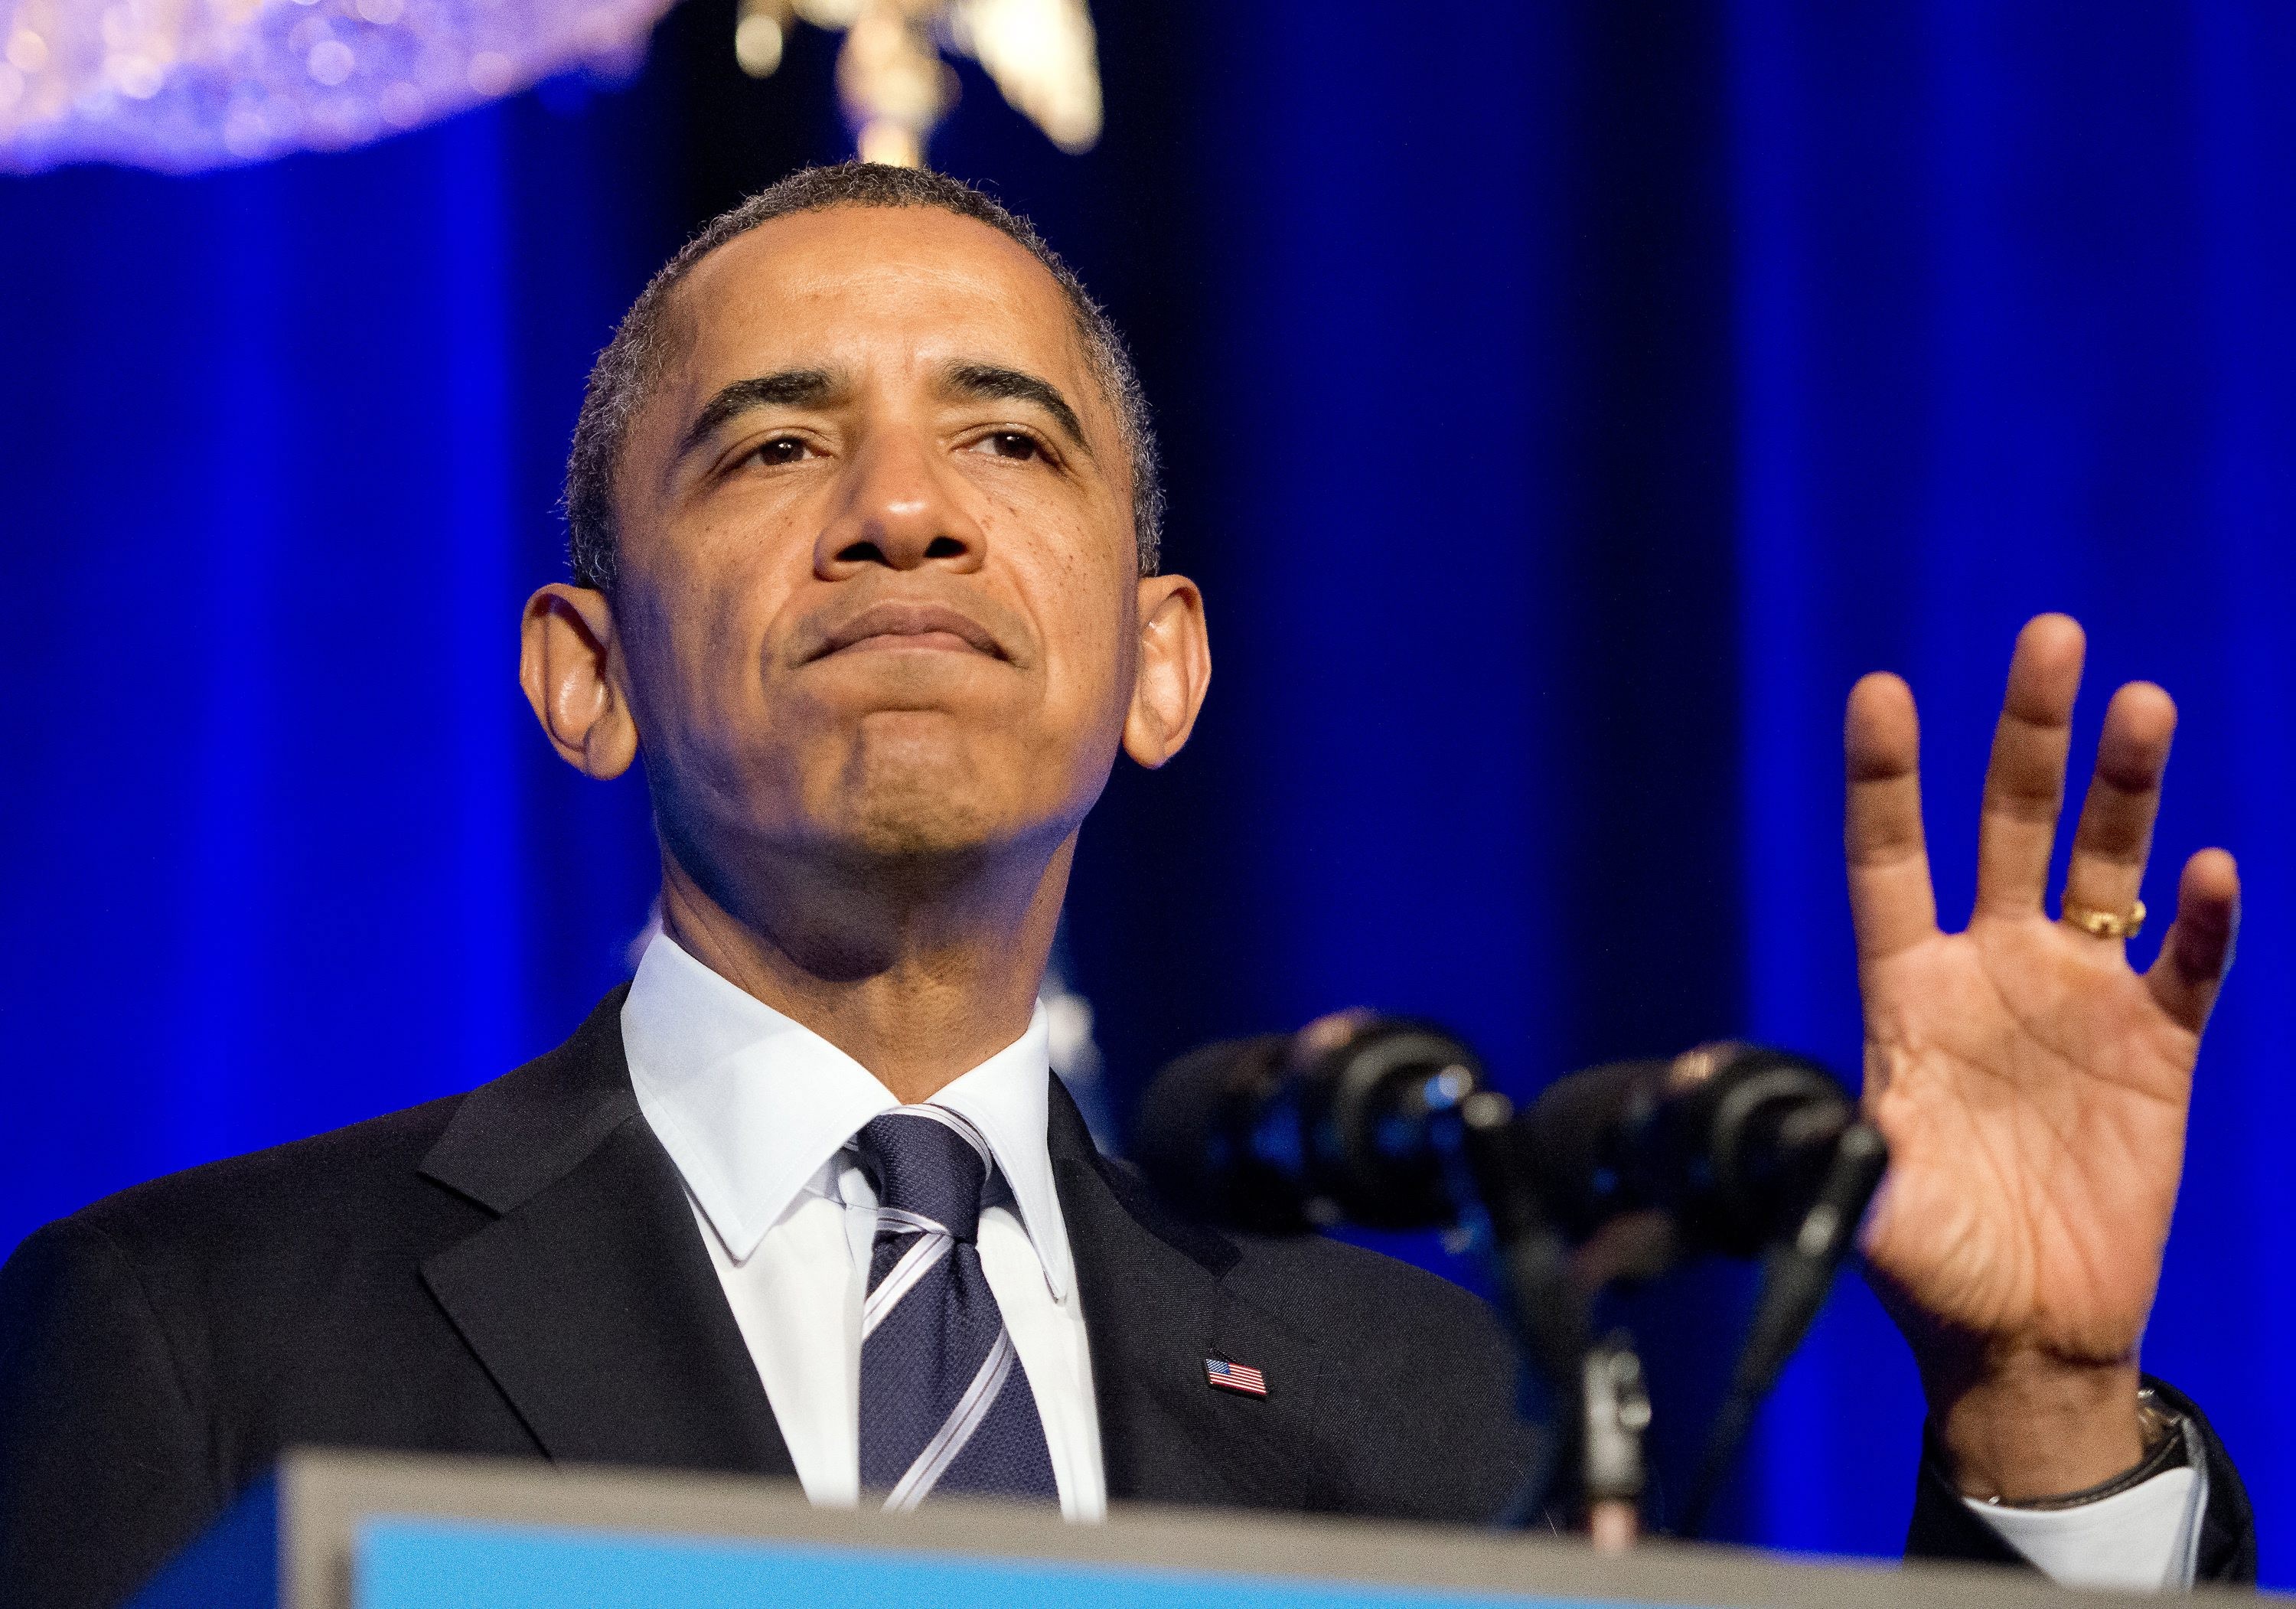 US President Barack Obama delivers remarks at an ‘Obamacare summit’ in Washington in November 2013. Photo: EPA